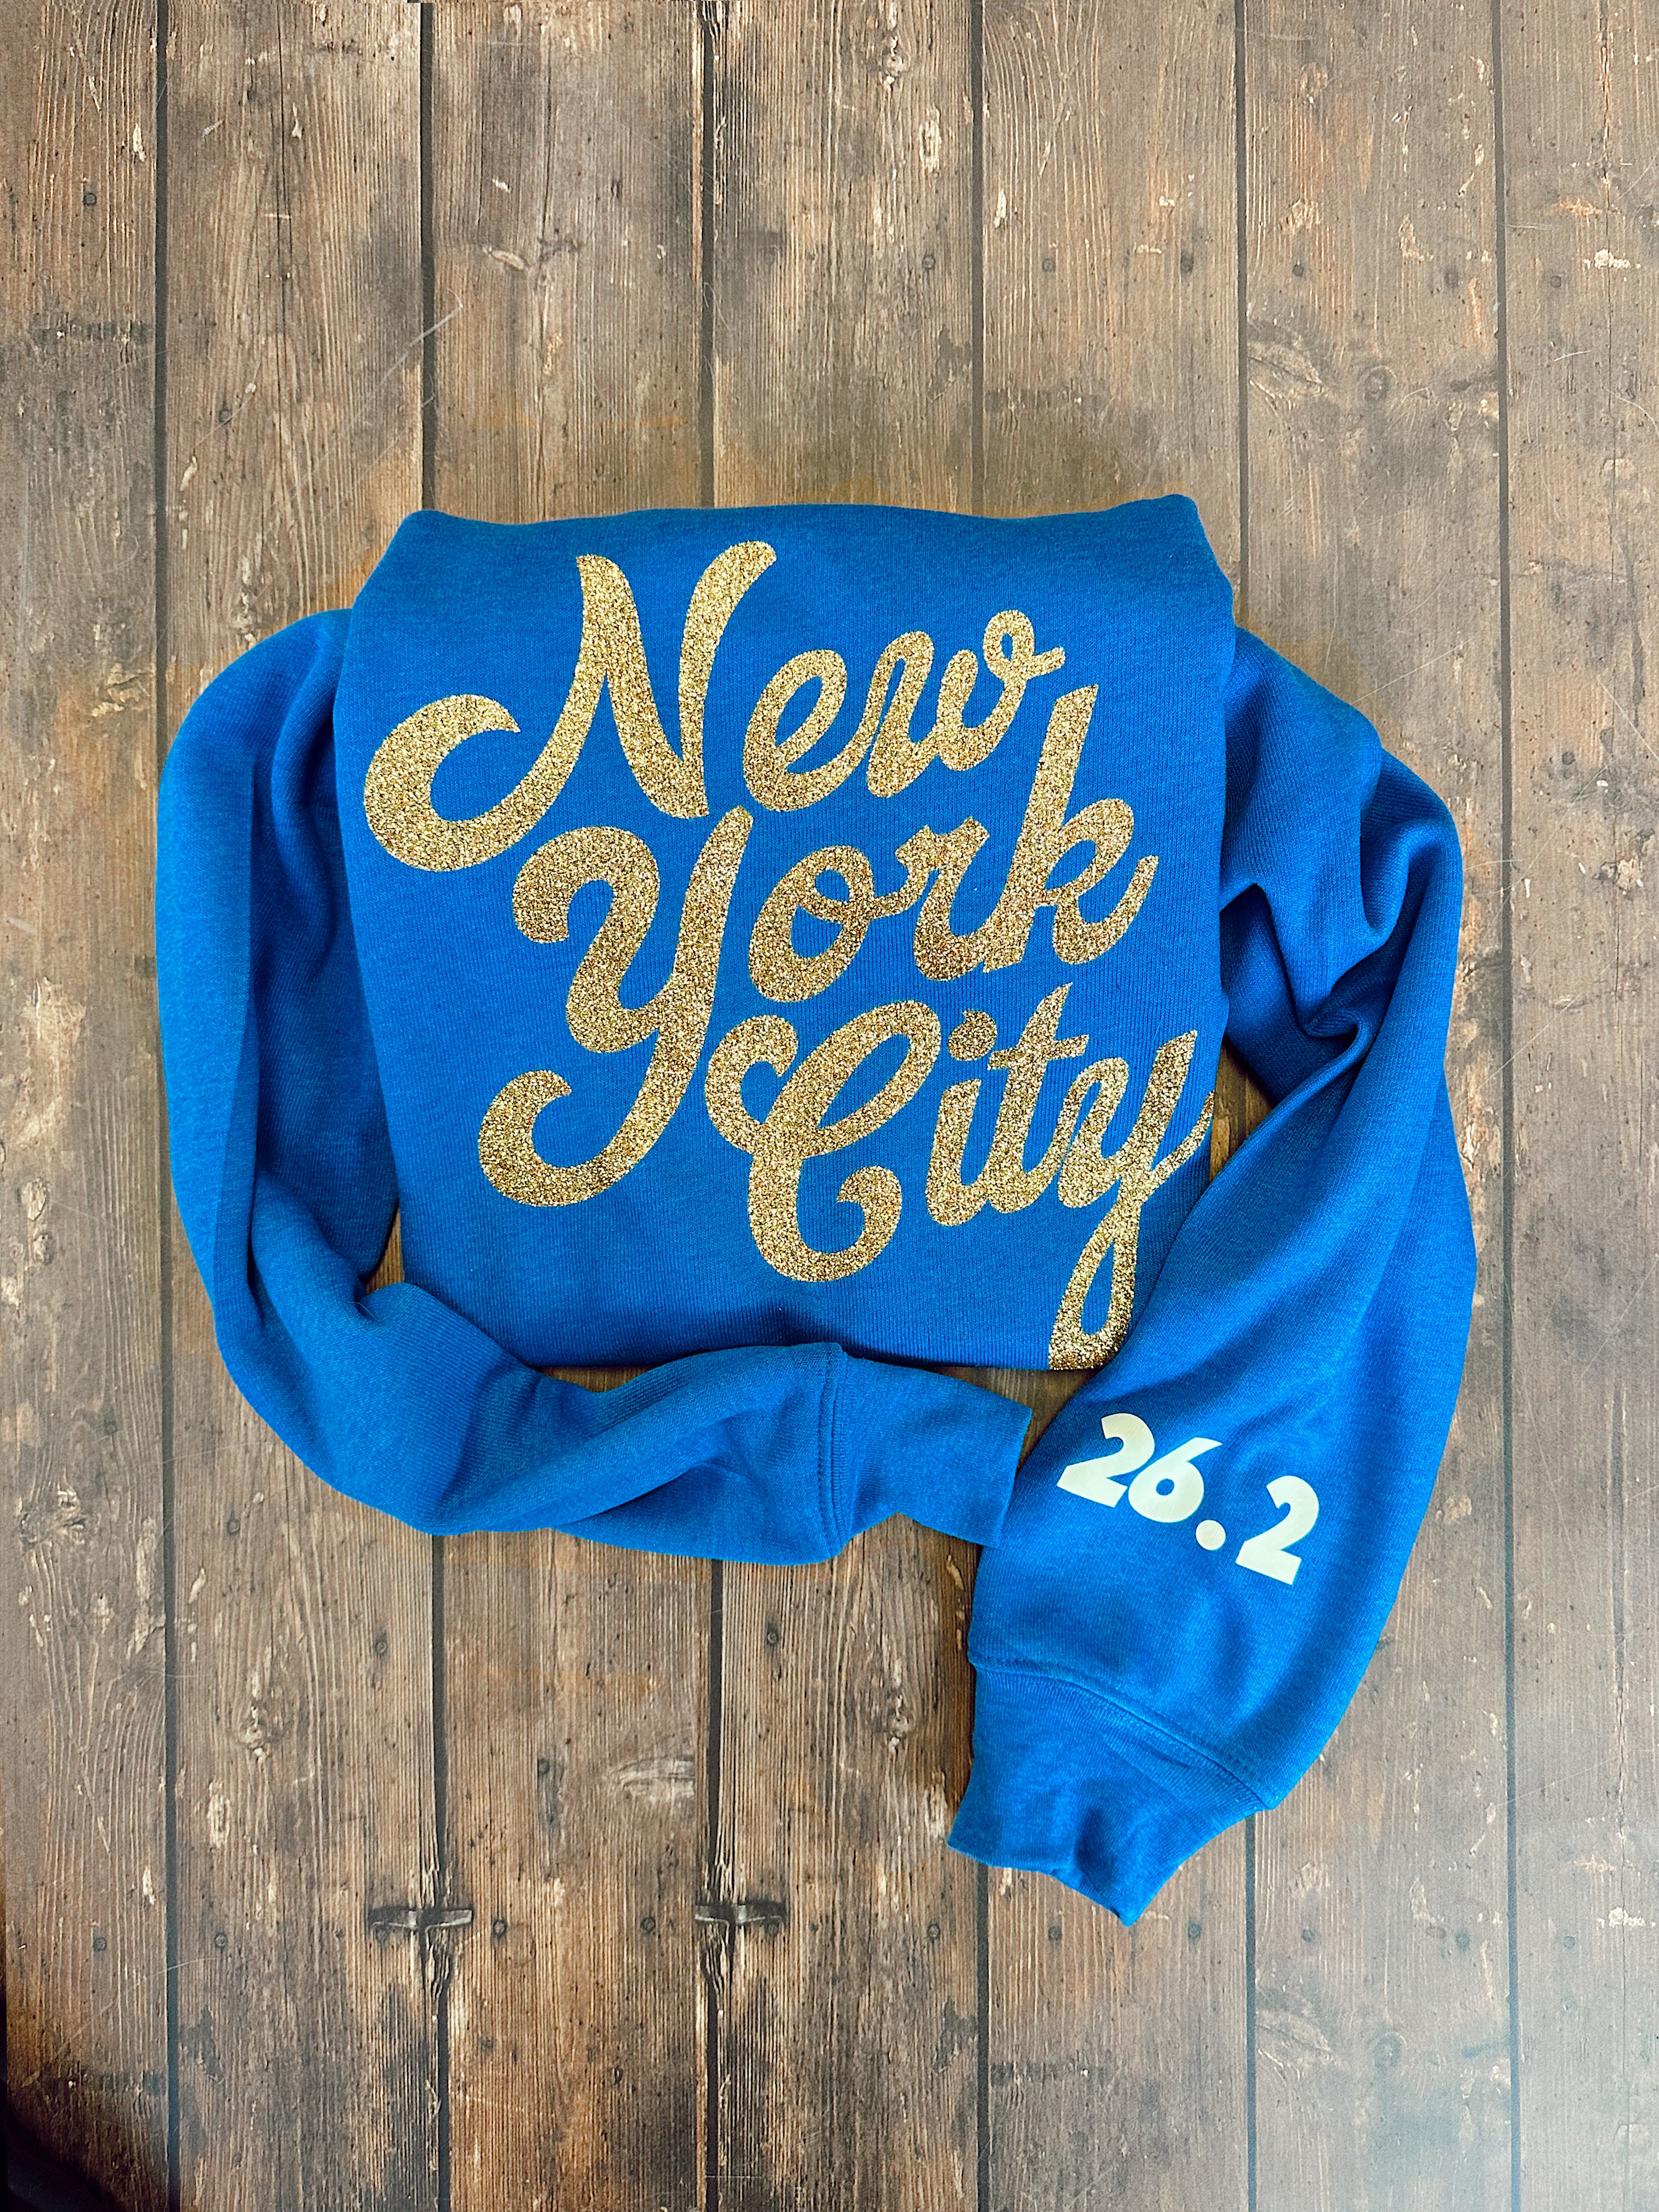 NYC 26.2 Marathon Sweatshirt - Running Sweatshirt, Marathon Apparel